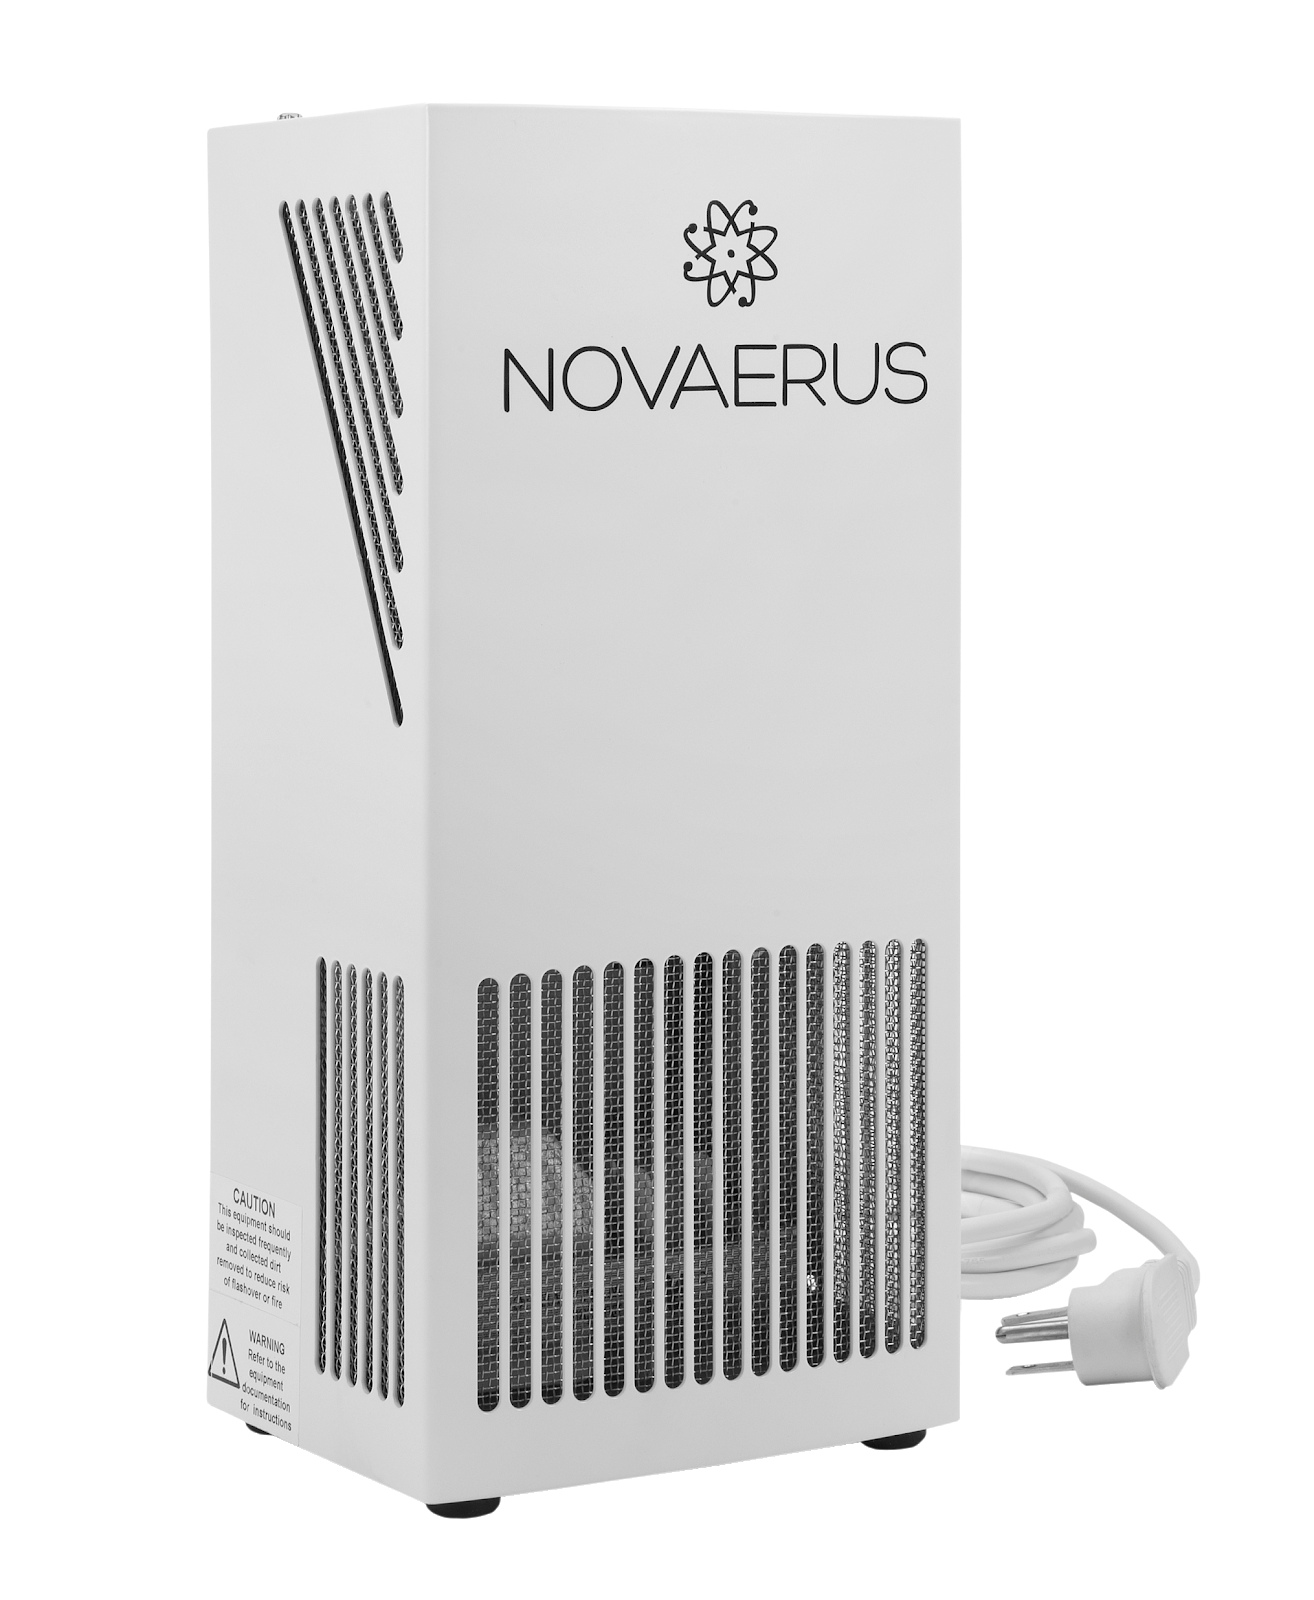 Novaerus Protect 200 image cover